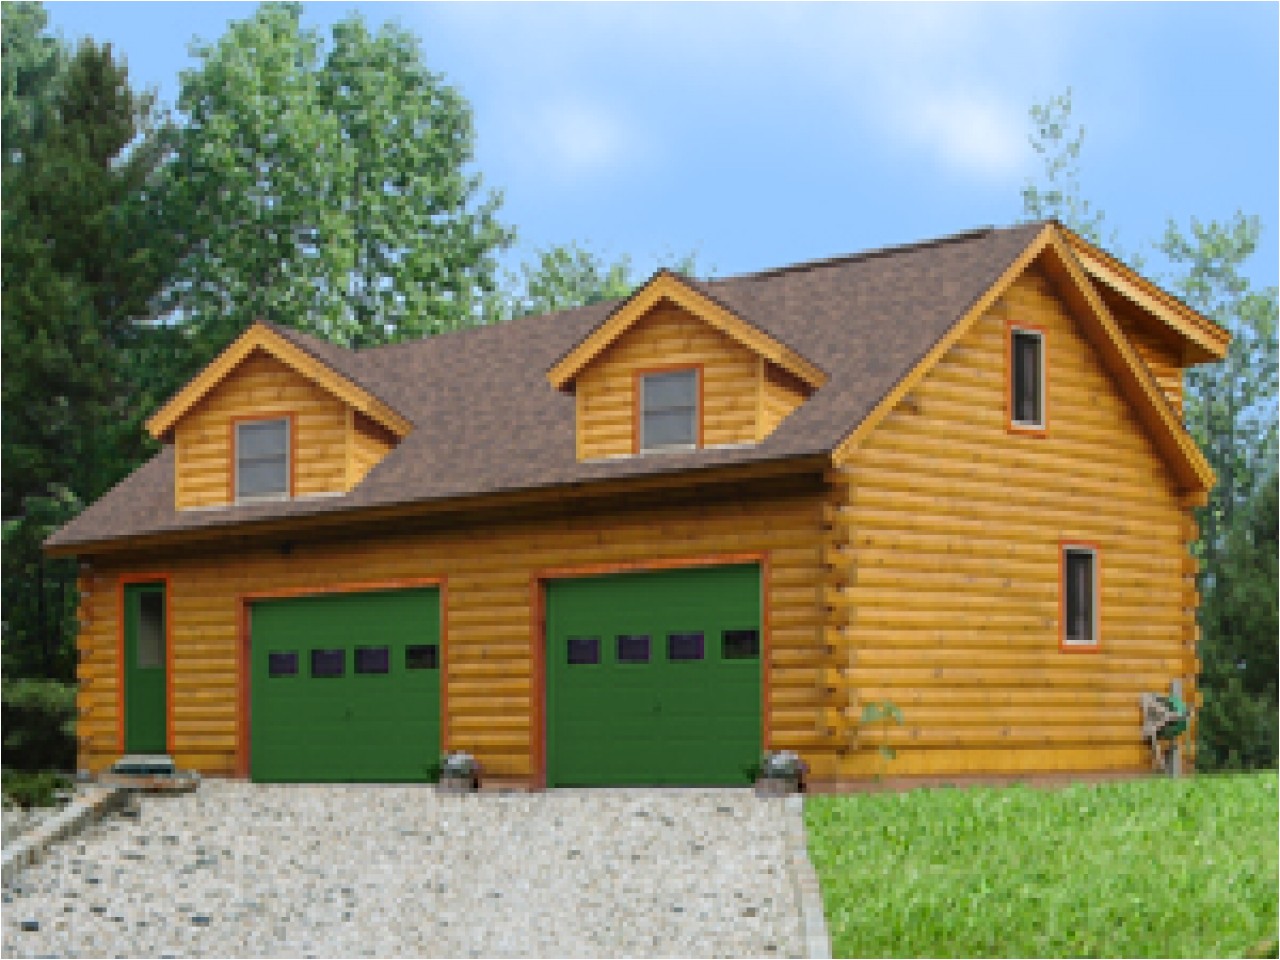 Log Home Garage Apartment Plan Log Home Plans with Garages Log Cabin Garage with